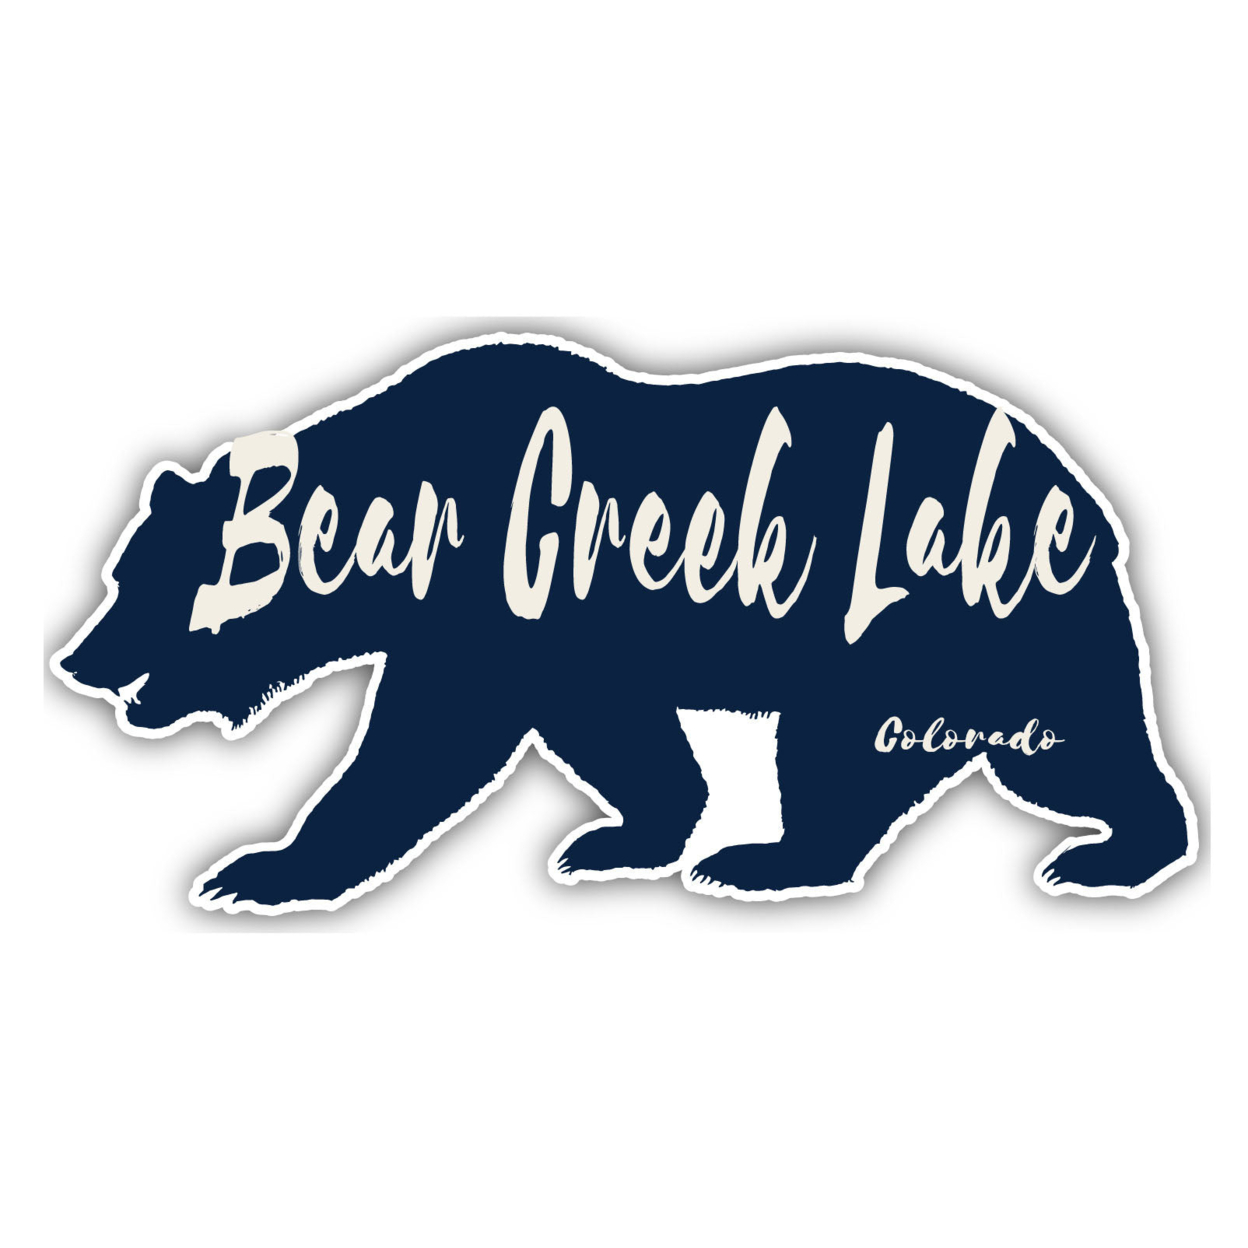 Bear Creek Lake Colorado Souvenir Decorative Stickers (Choose Theme And Size) - 4-Pack, 6-Inch, Bear